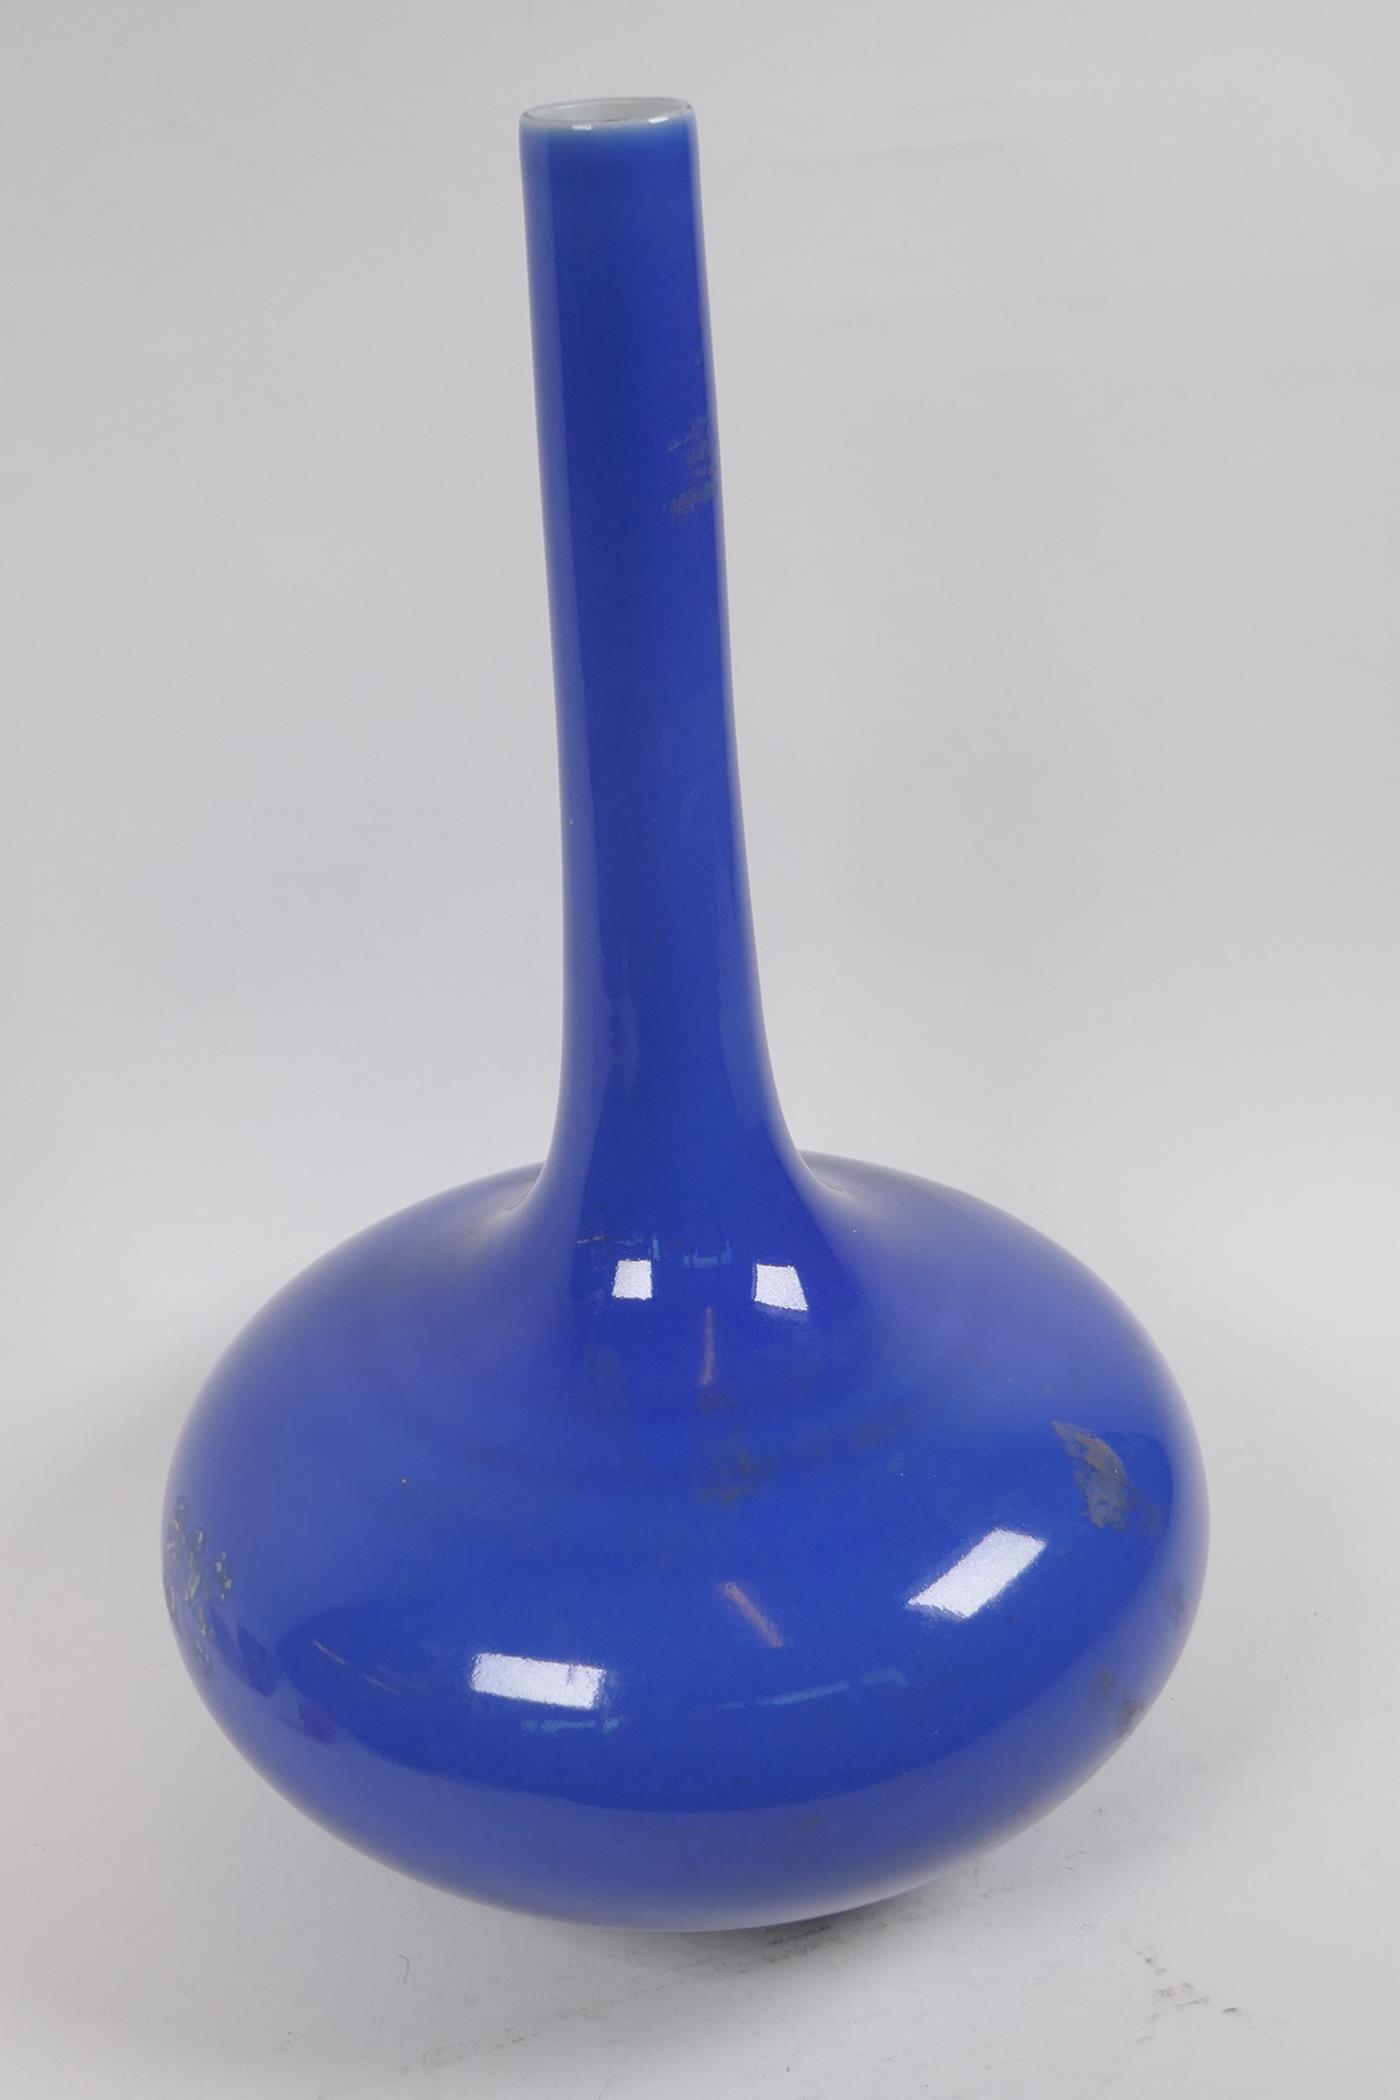 A Chinese blue glazed porcelain vase, 6 character mark to base, 38cm high - Image 2 of 3